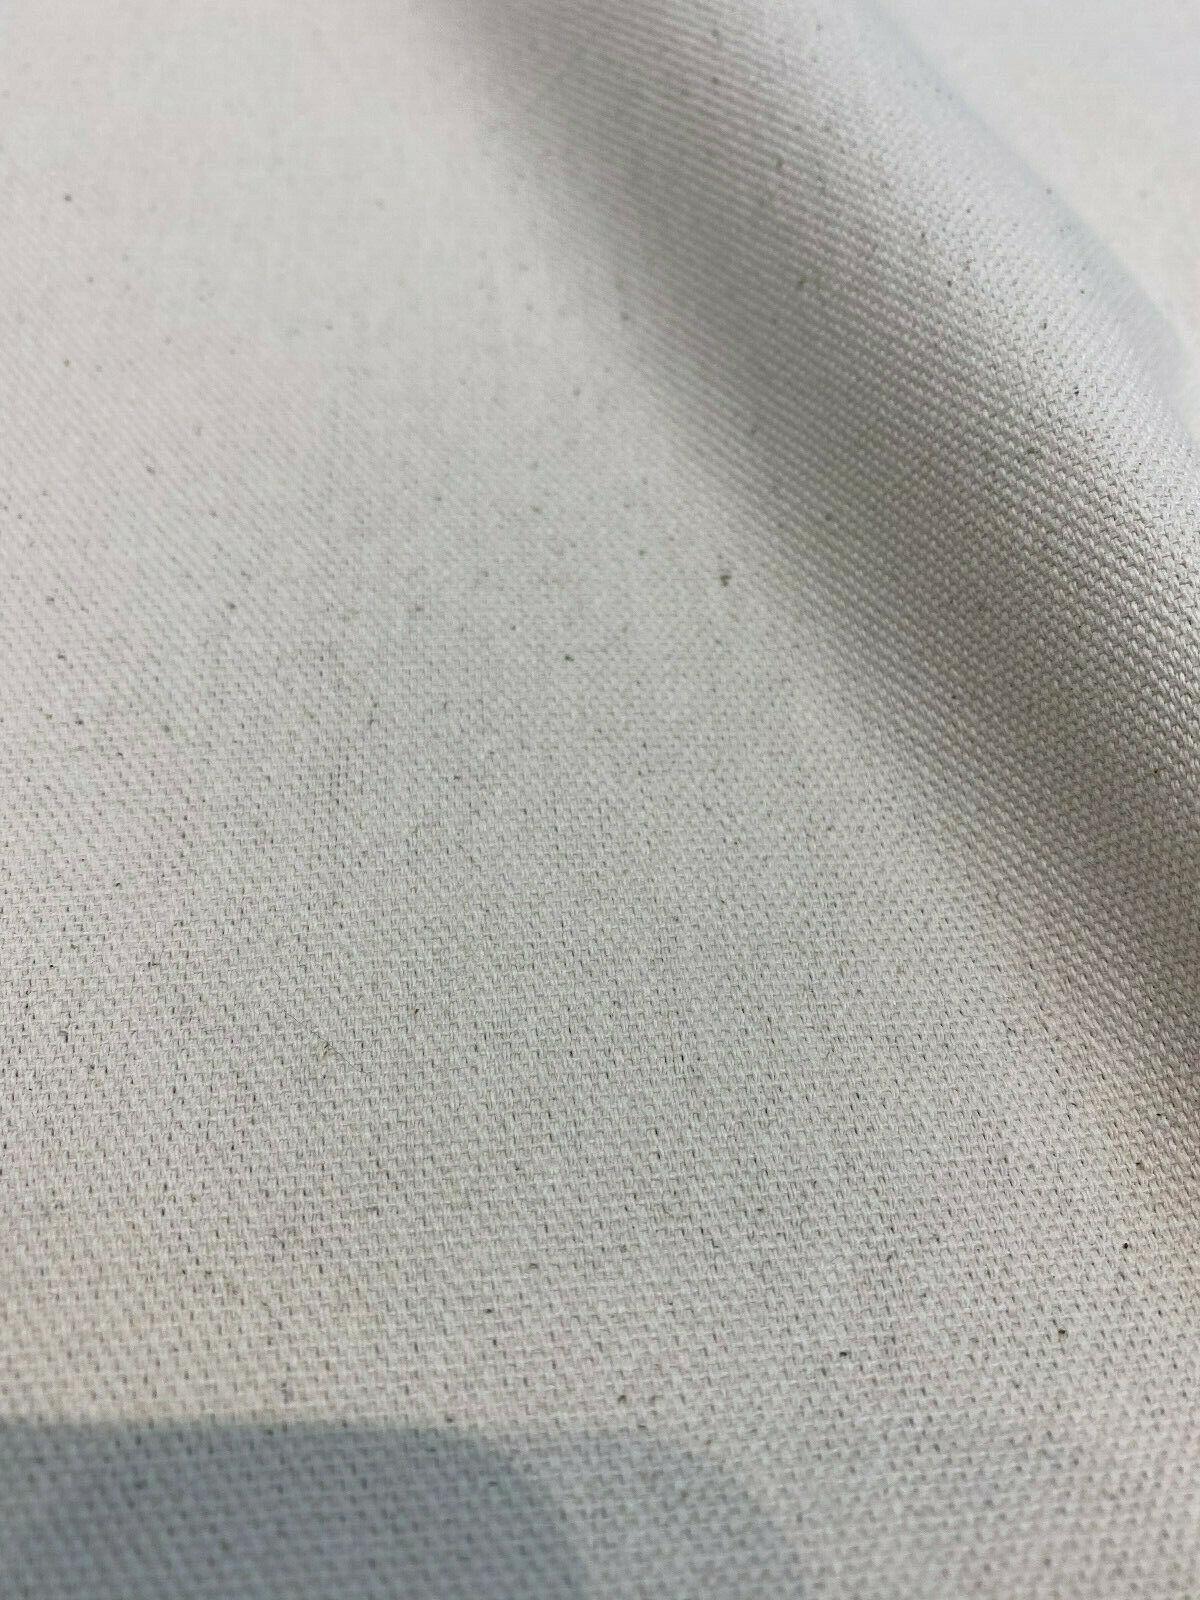 Natural Cotton Canvas Drill Fabric, 63 Wide